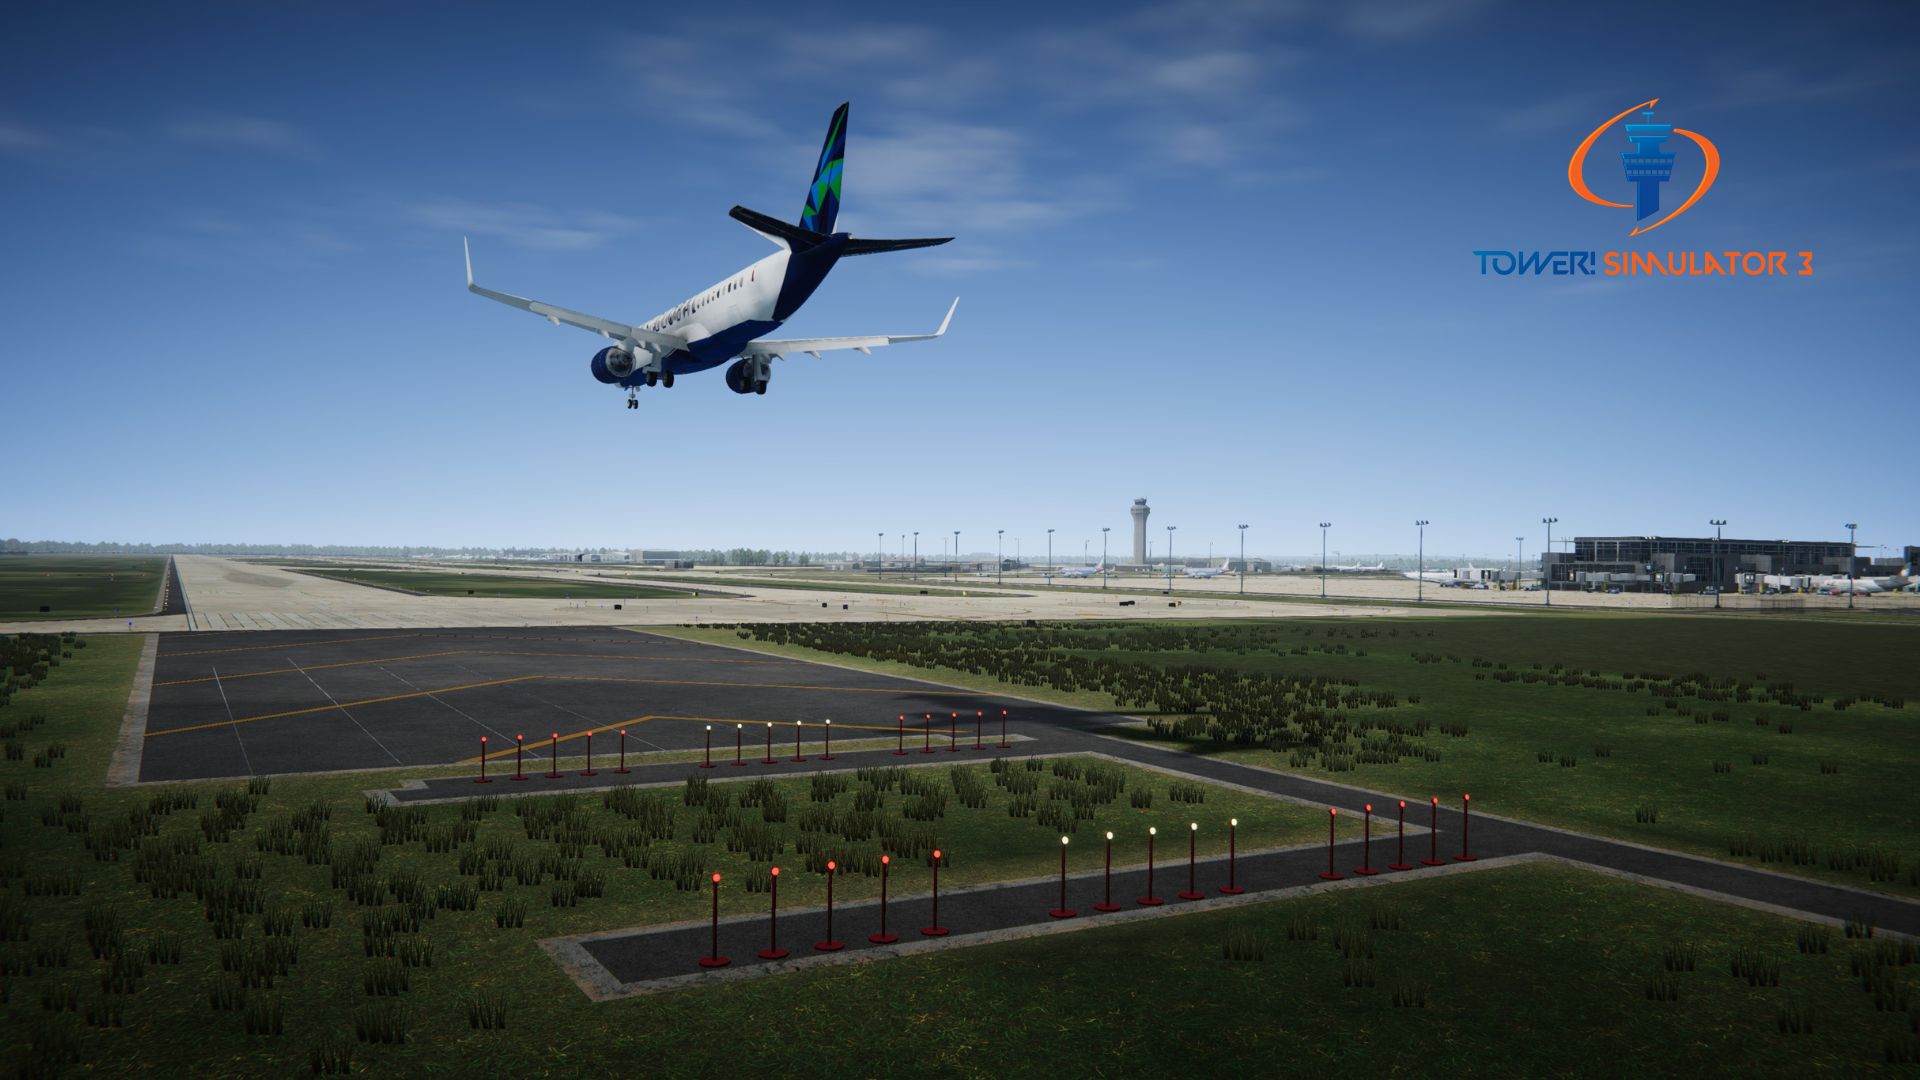 [KAUS] - Austin Airport - Tower! Simulator 3 - FeelThere.com